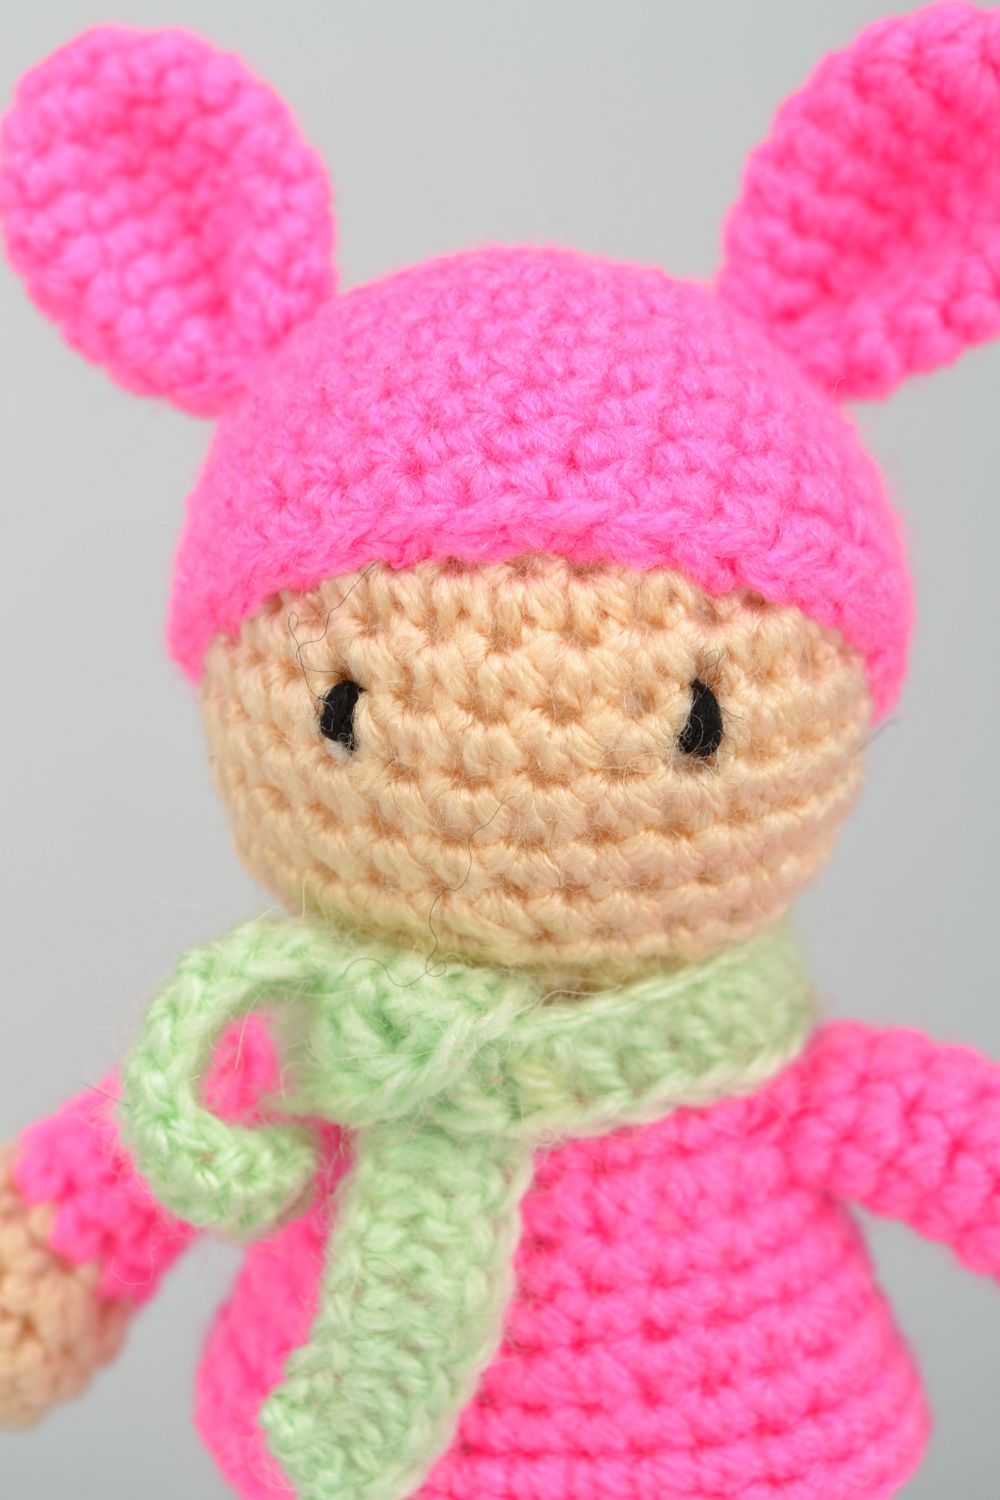 Soft crochet woolen toy doll photo 3